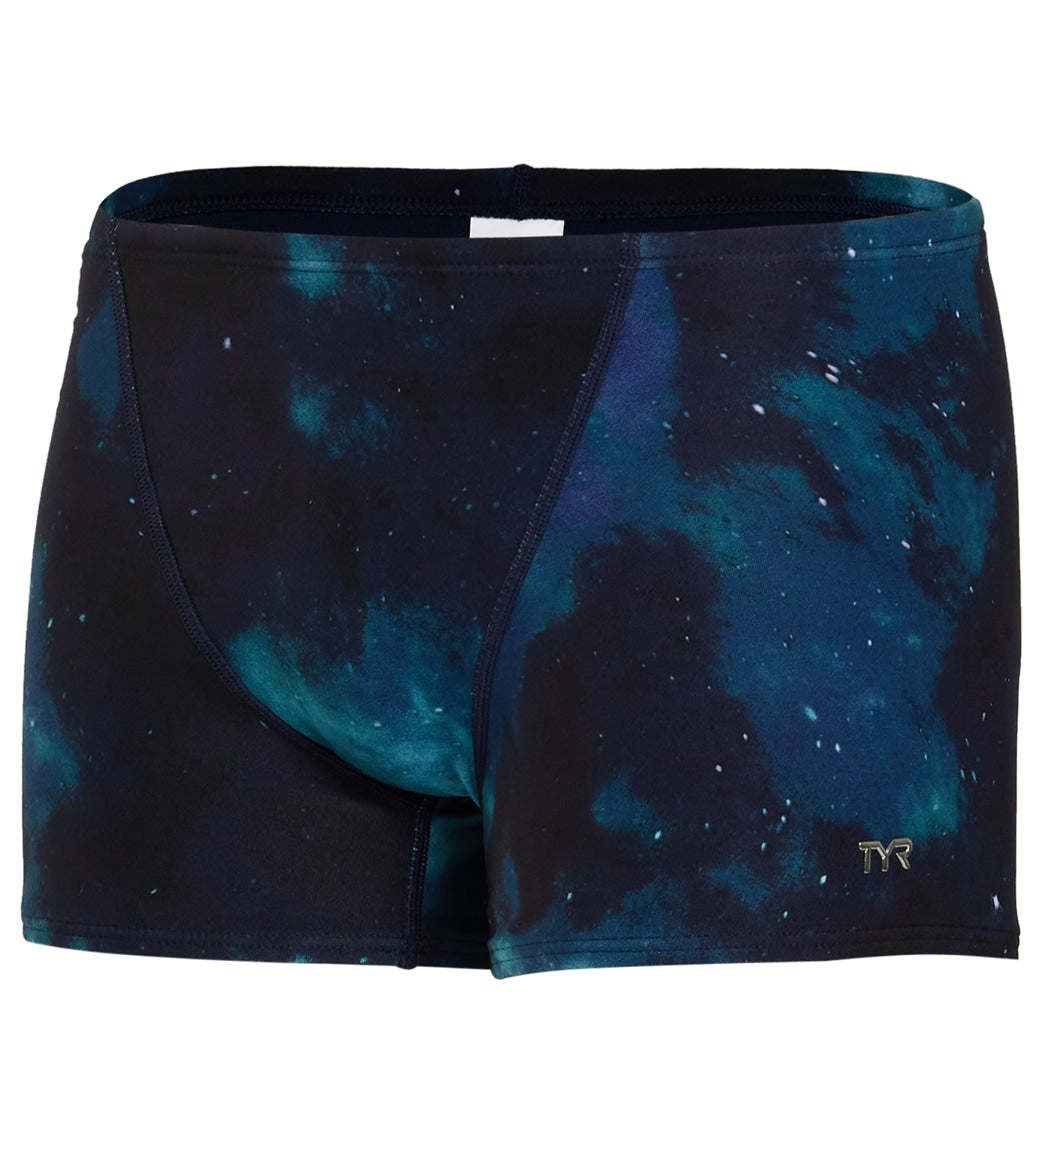 TYR Men's Cosmic Night Square Leg Swimsuit at